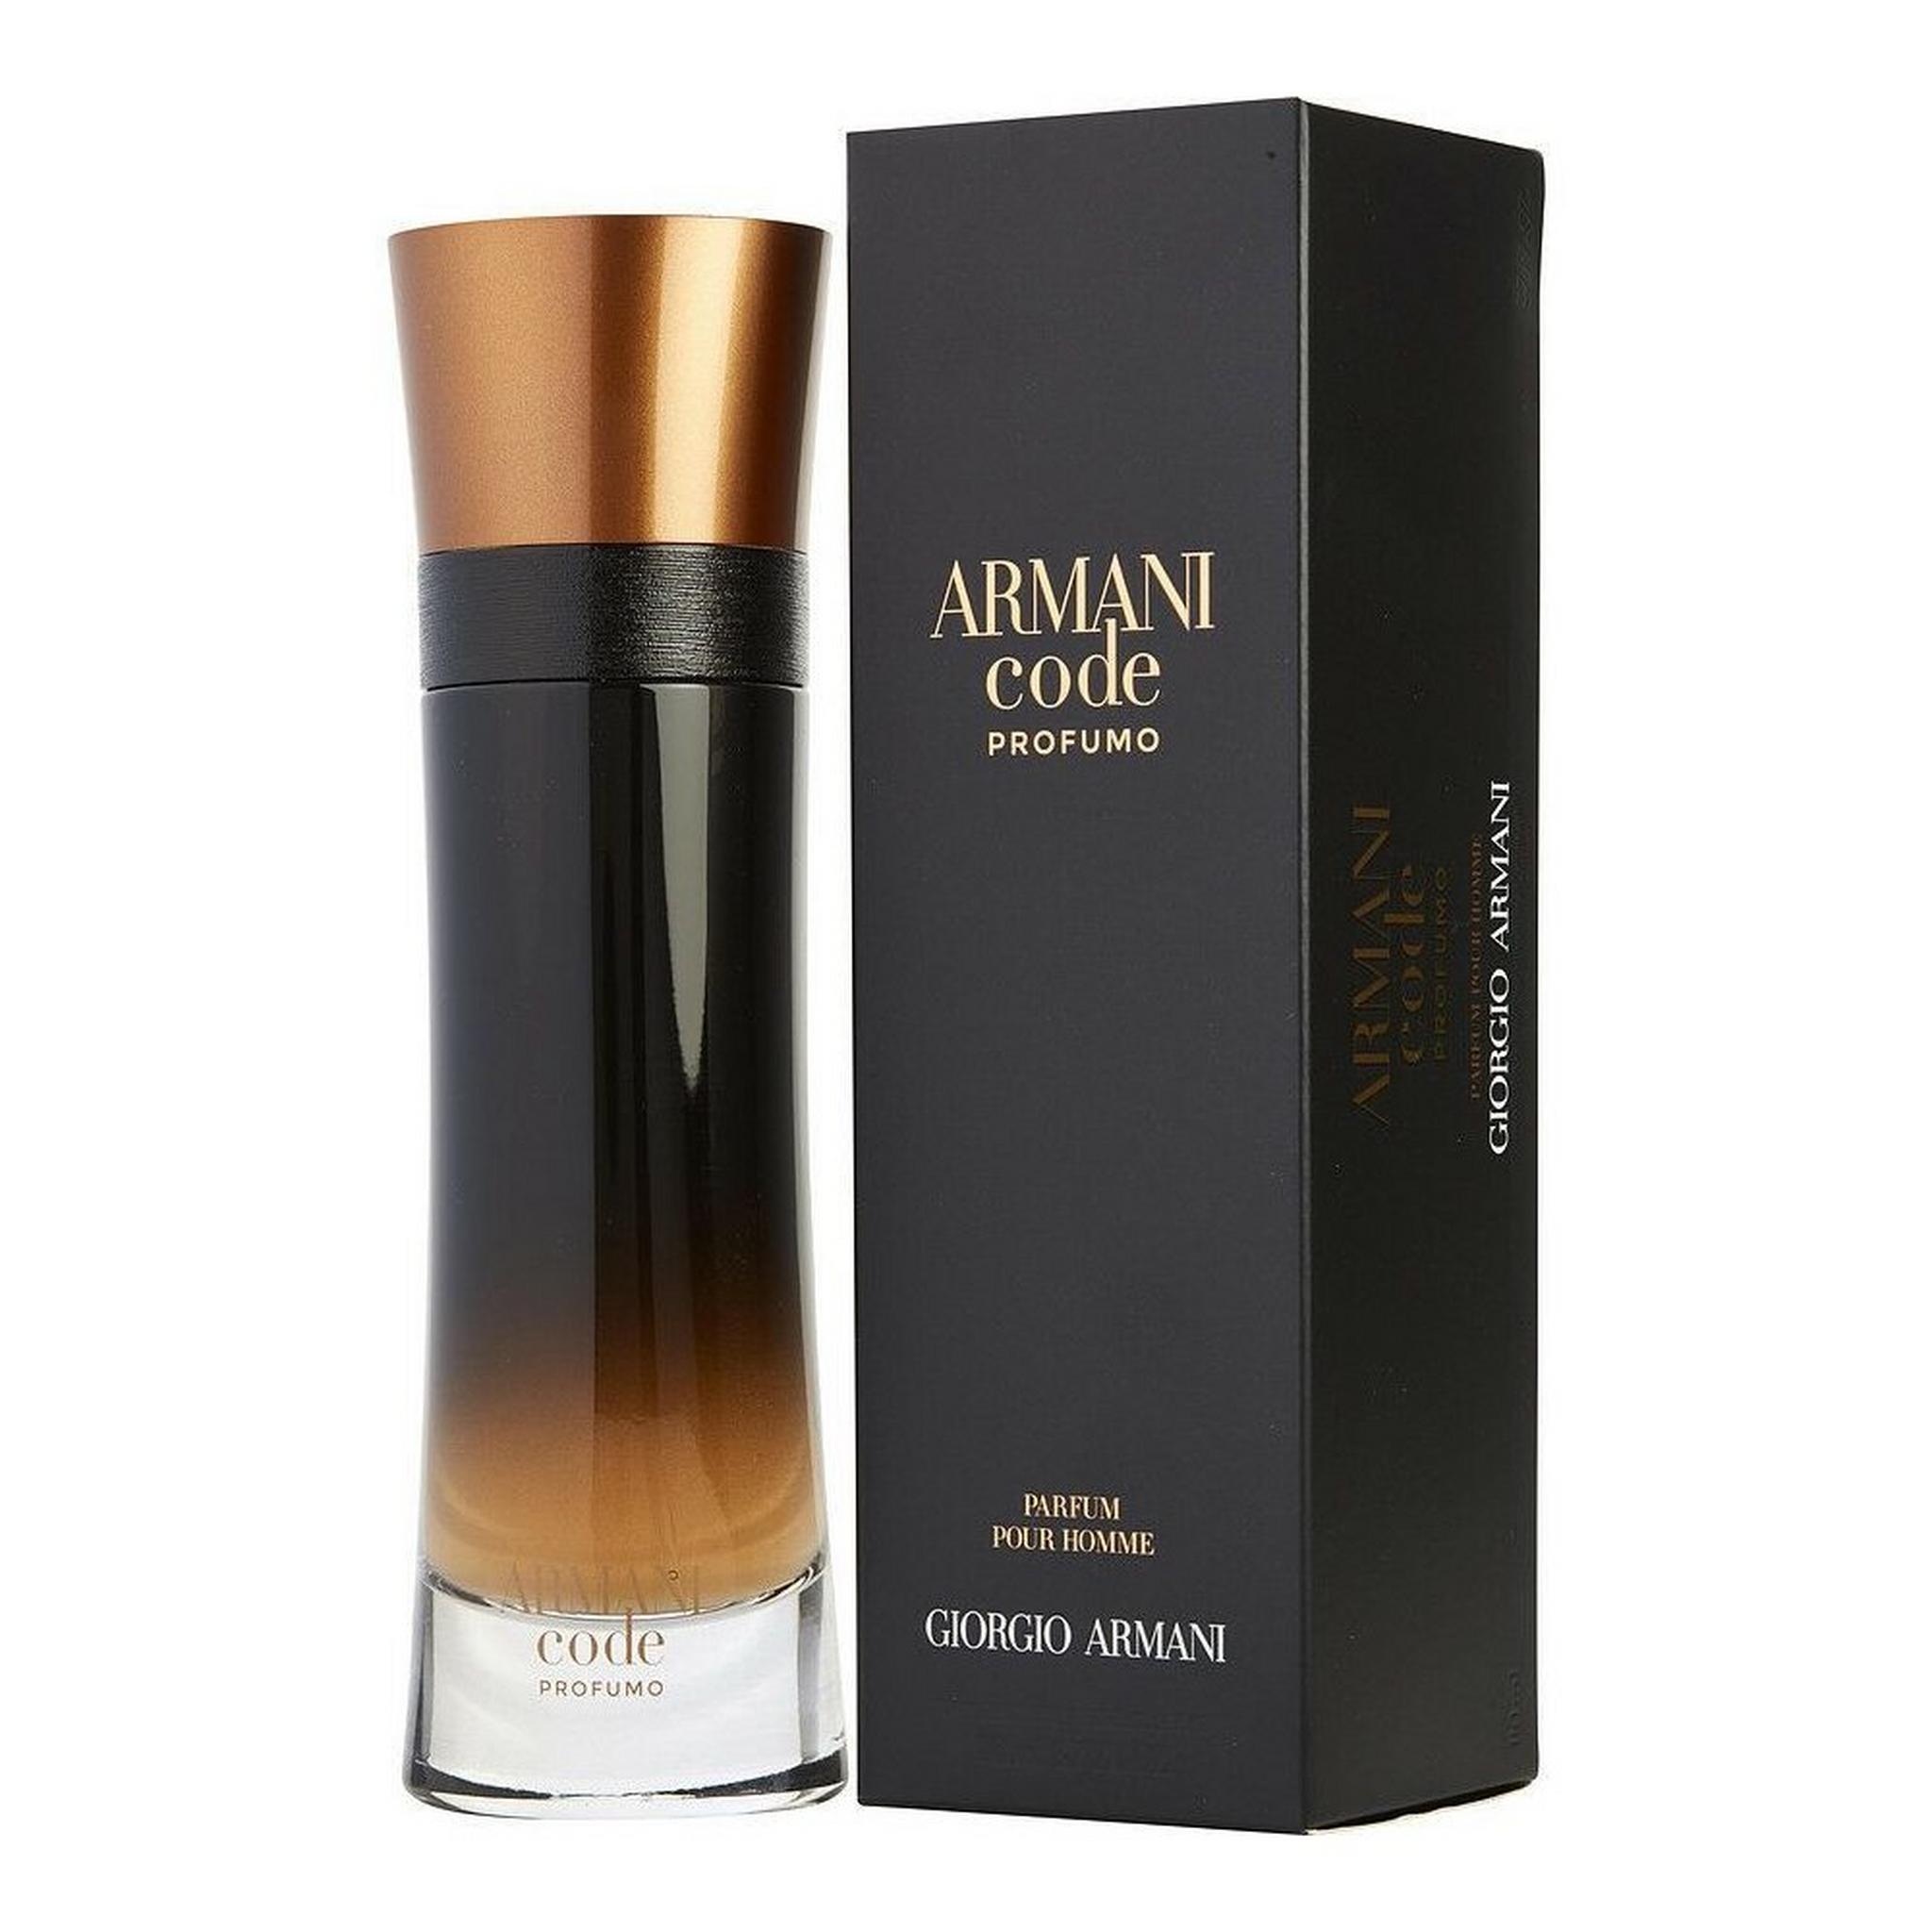 Armani Code Profumo Giorgio Armani Eau De Parfum for Men 110ml